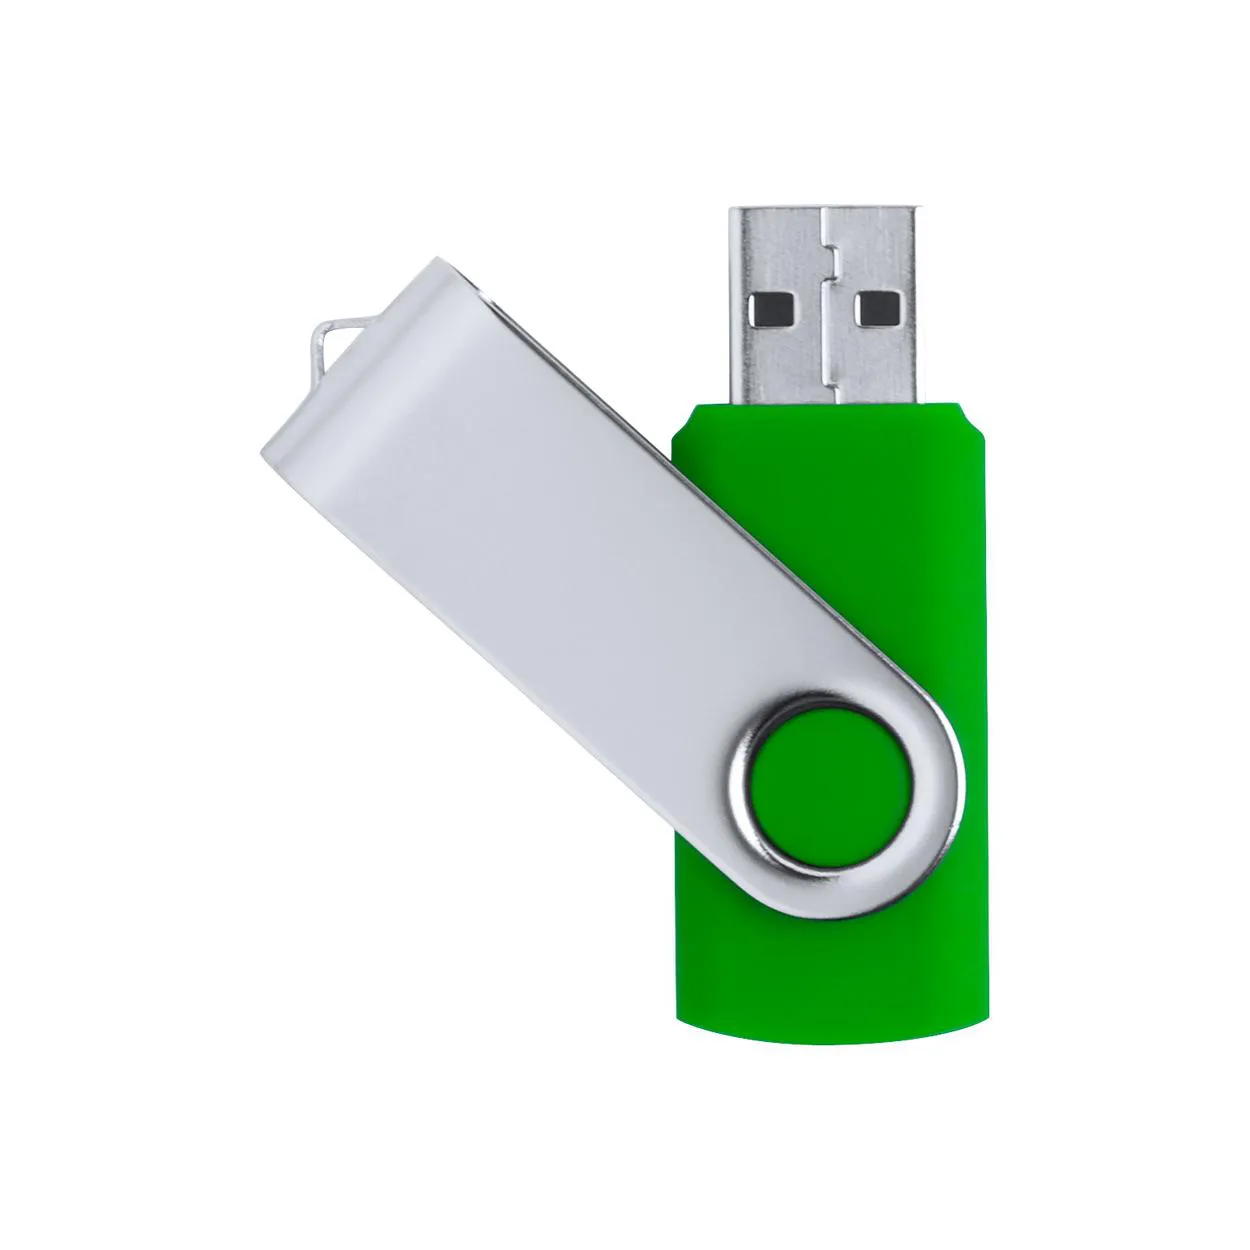 Memorie USB Rebik 16Gb verde